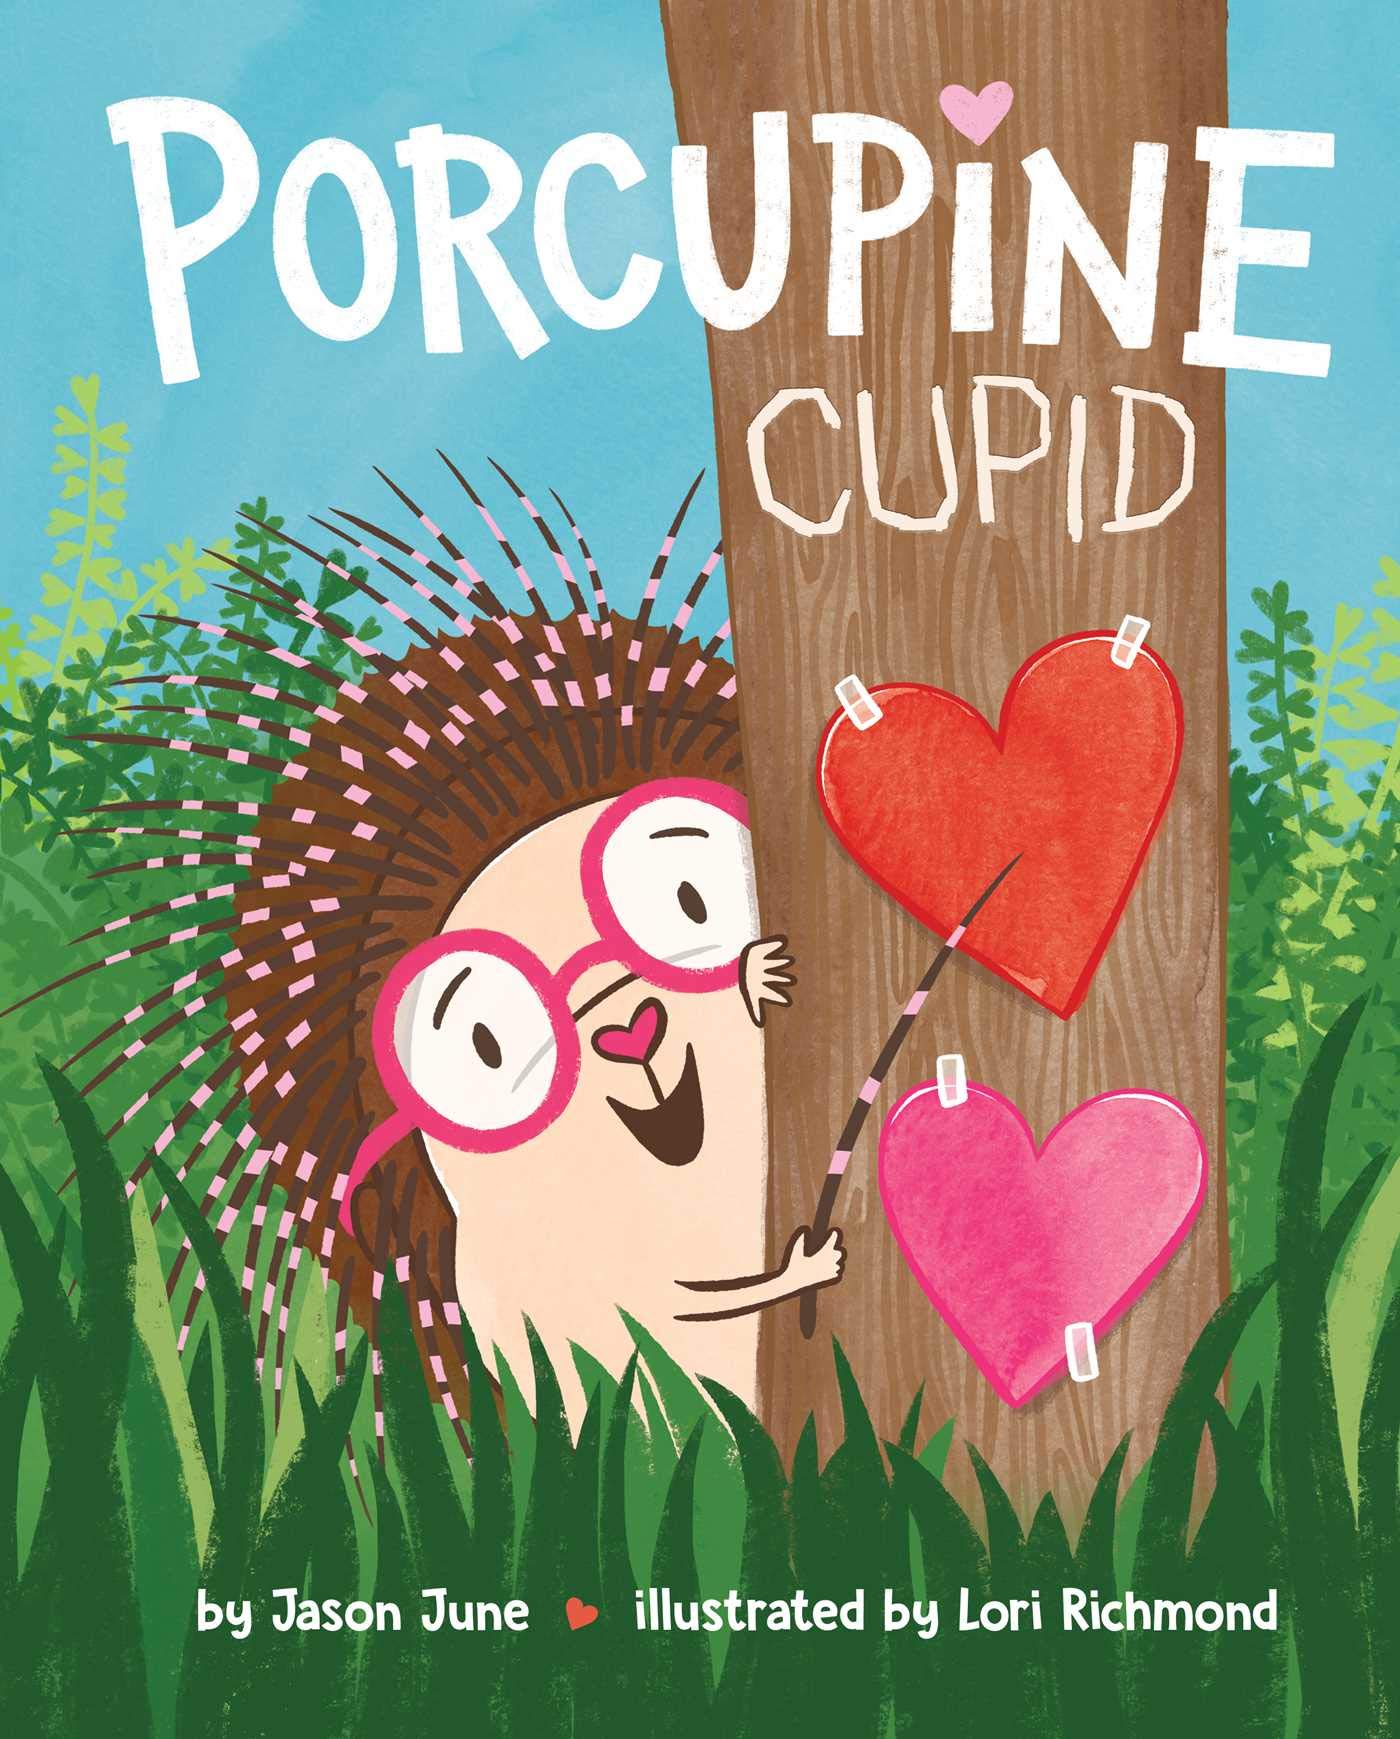 Porcupine Cupid